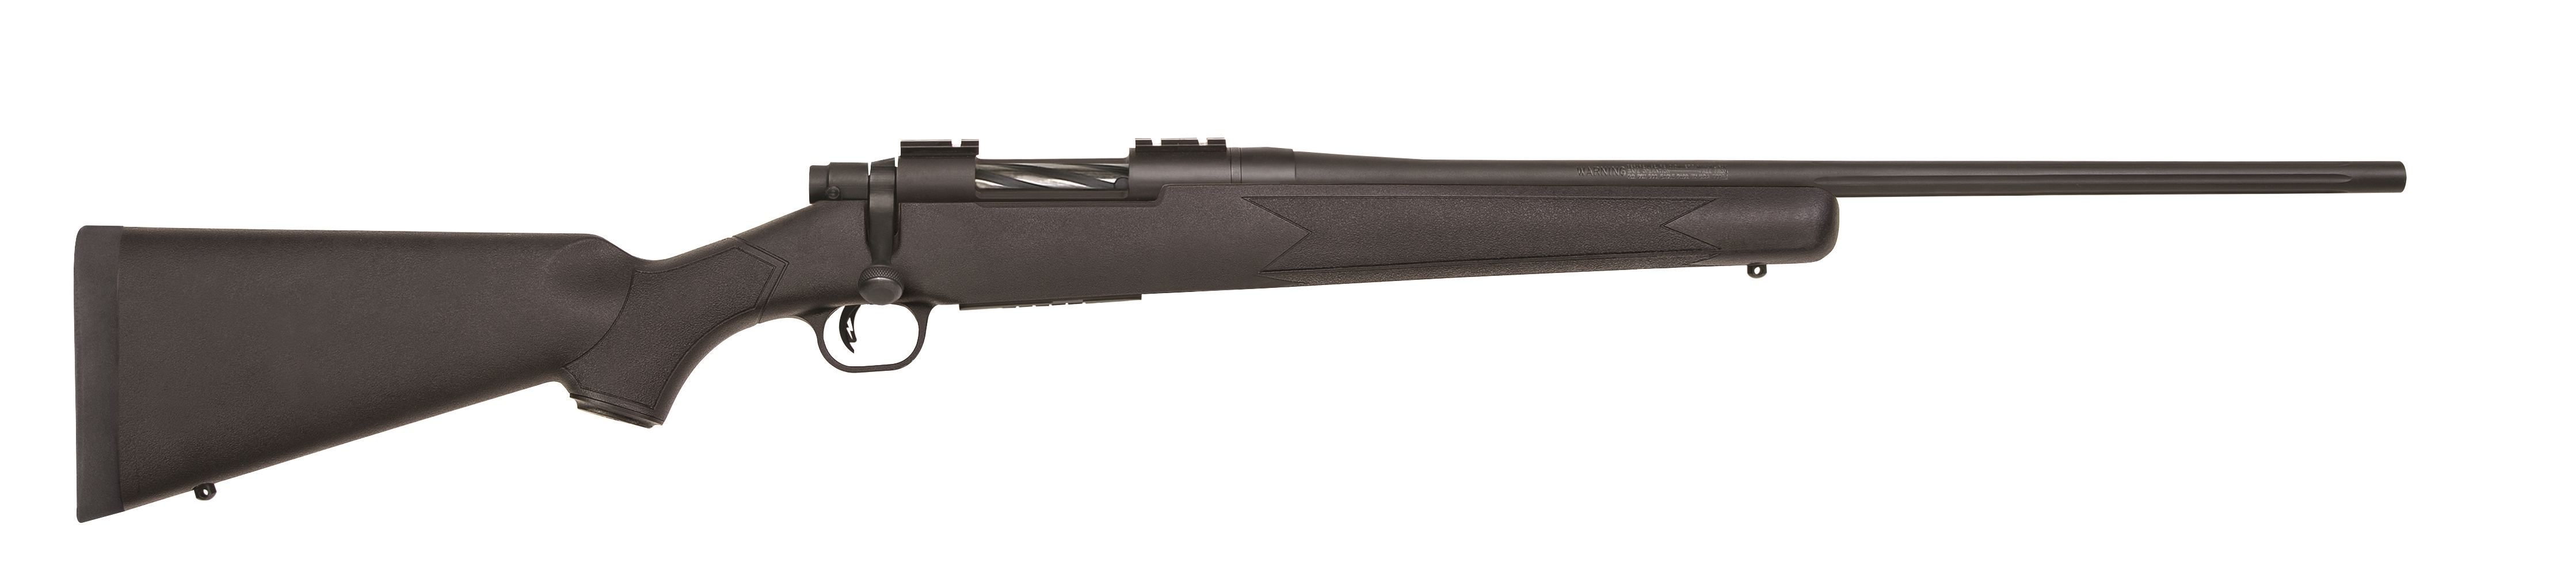 Mossberg Patriot Rifle 350 Legend